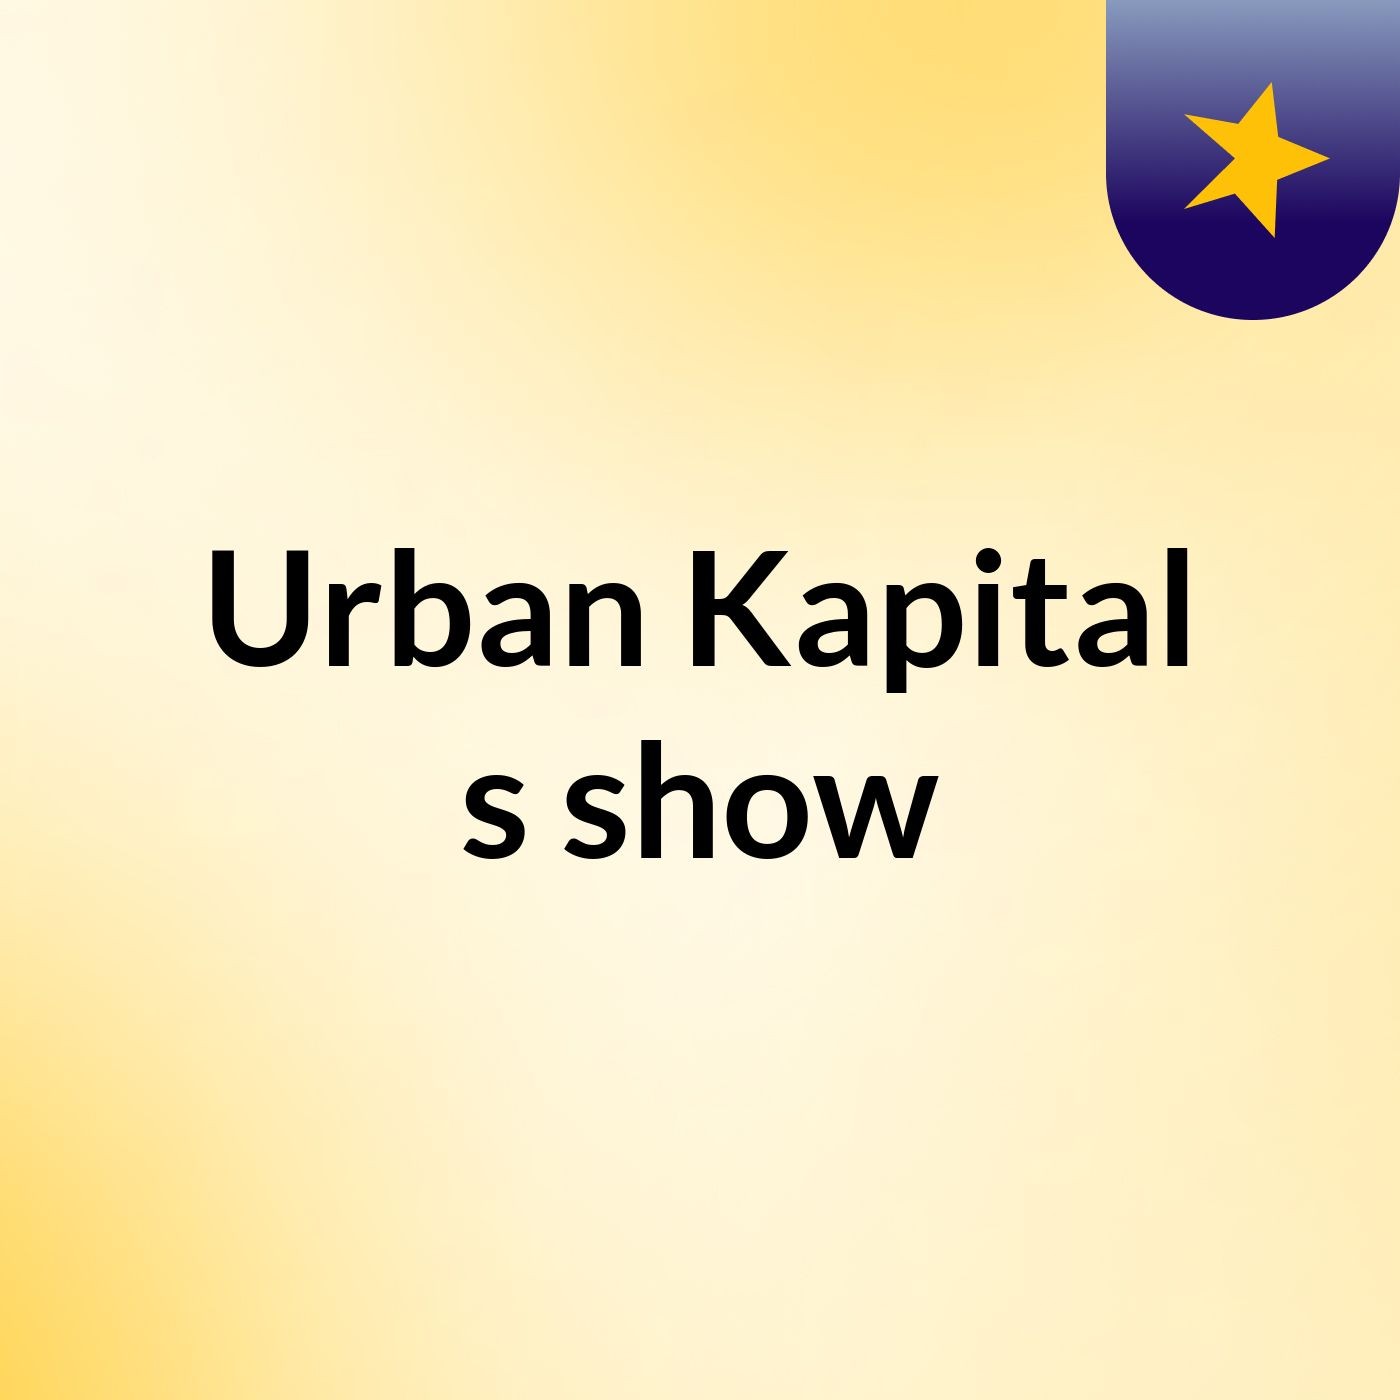 Urban Kapital's show